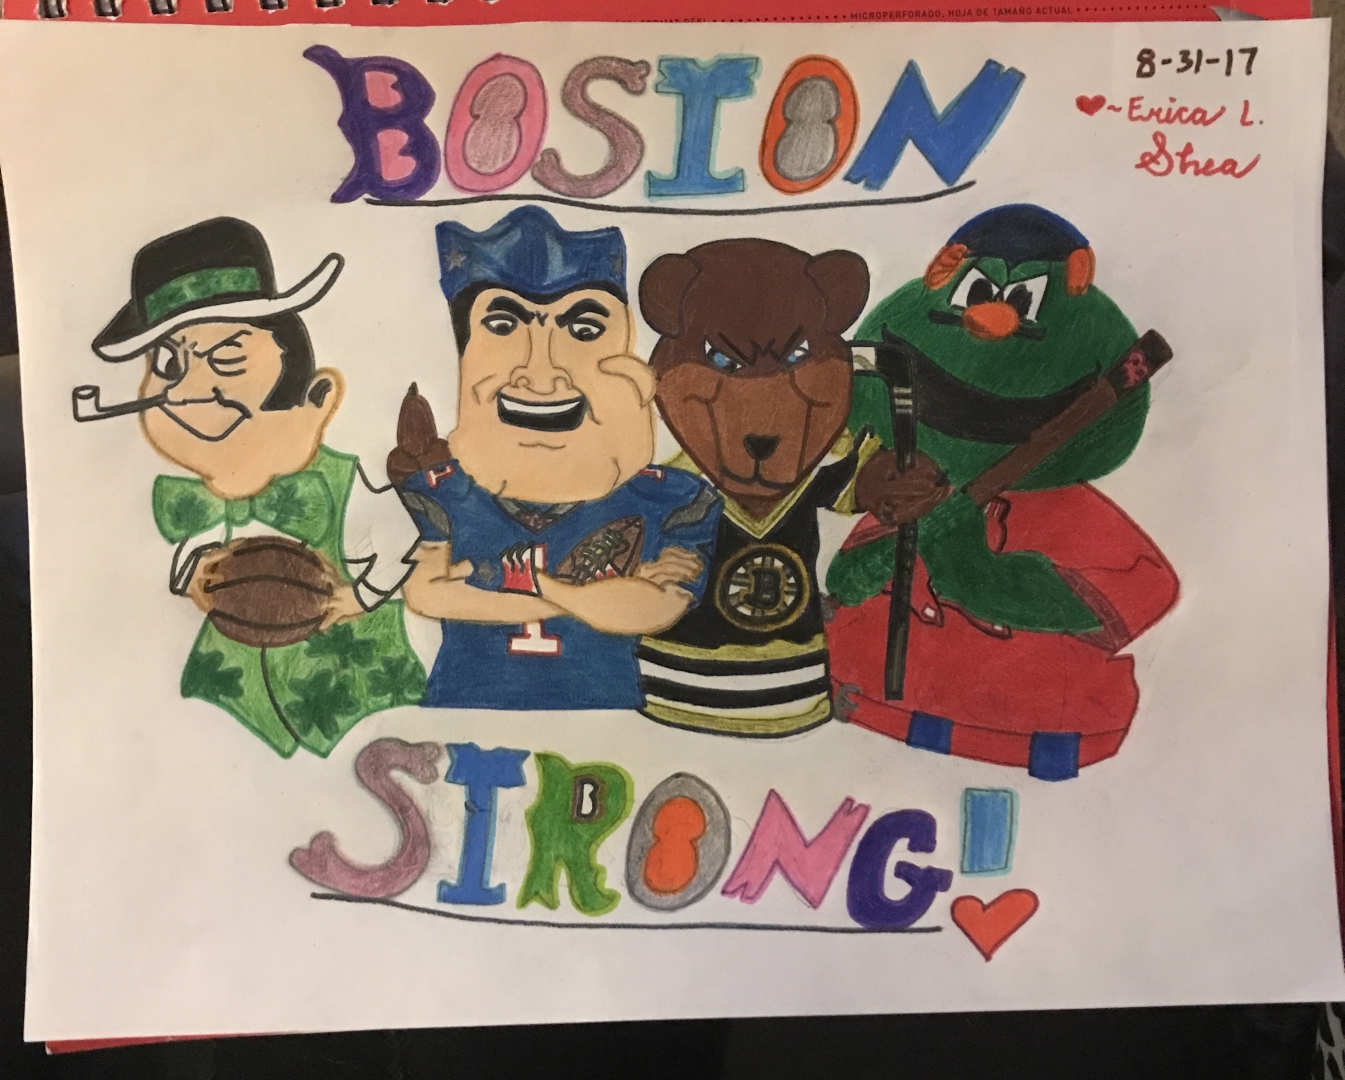 Boston Strong Mascots